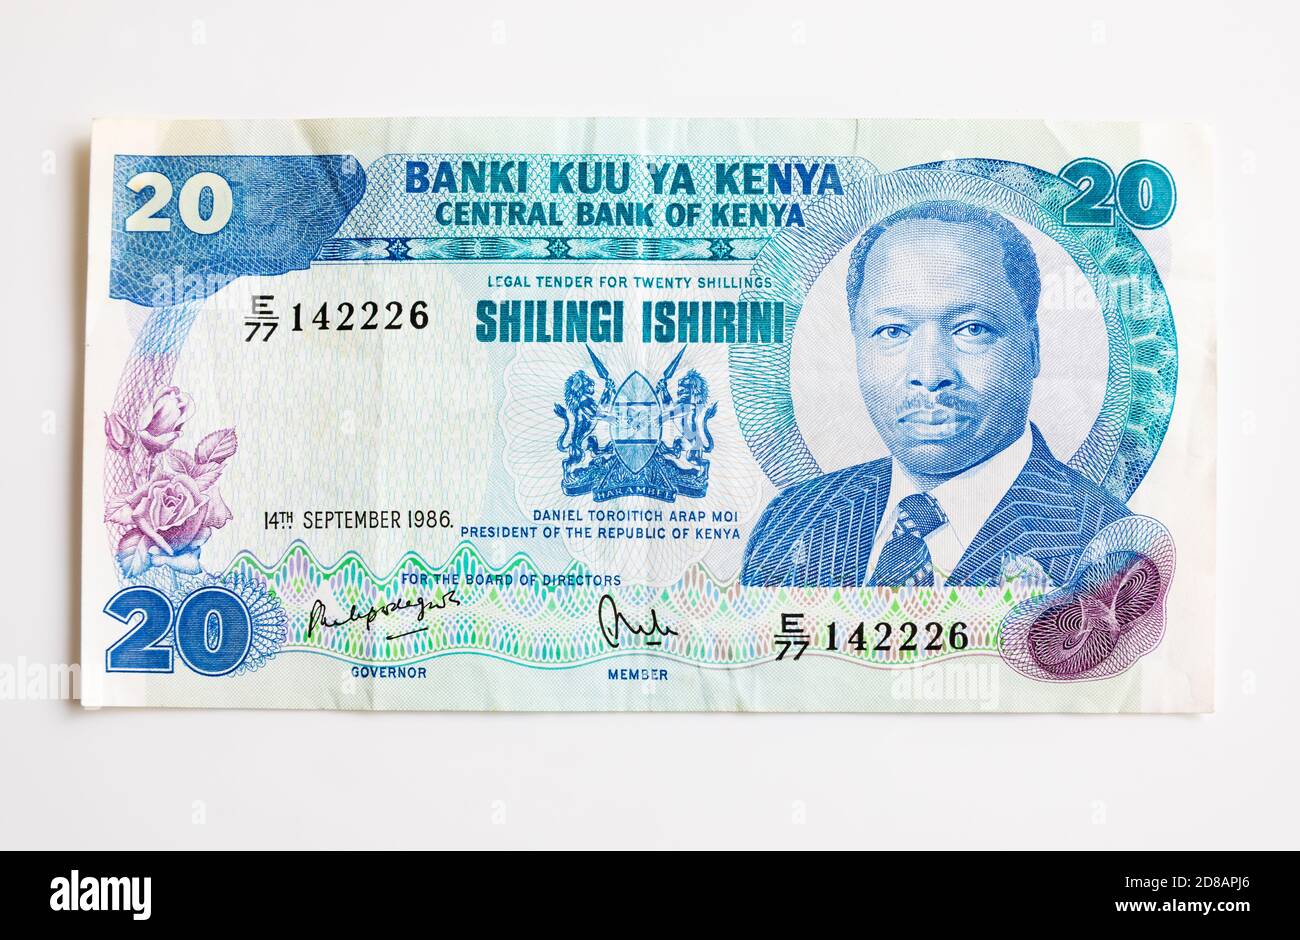 Central Bank of  Kenya, 20 shilling note with President Daniel Moi pictured. Banki Kuu Ya Kenya. Stock Photo